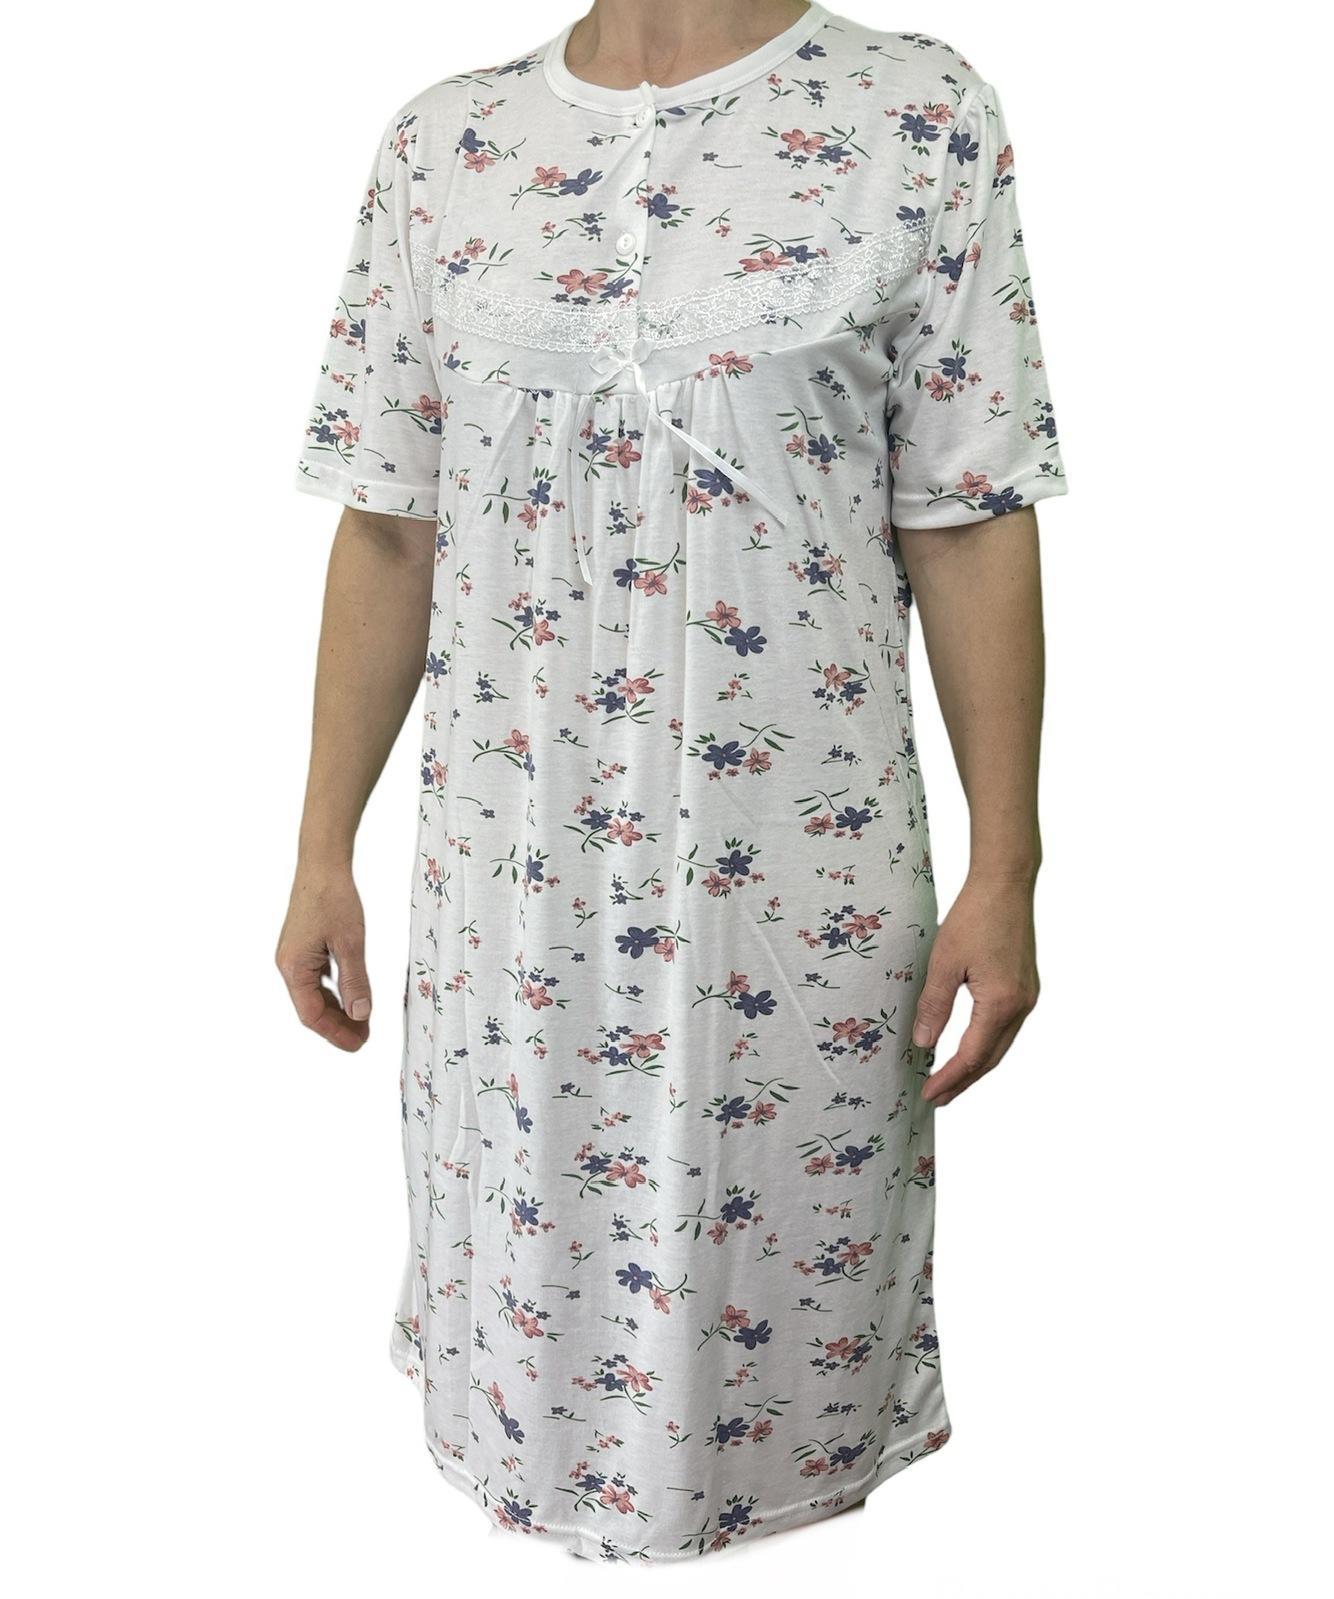 Womens Ladies Cotton Nightie Night Gown Slip Petticoat PJs Sleepwear Dress - White/Pink - 18